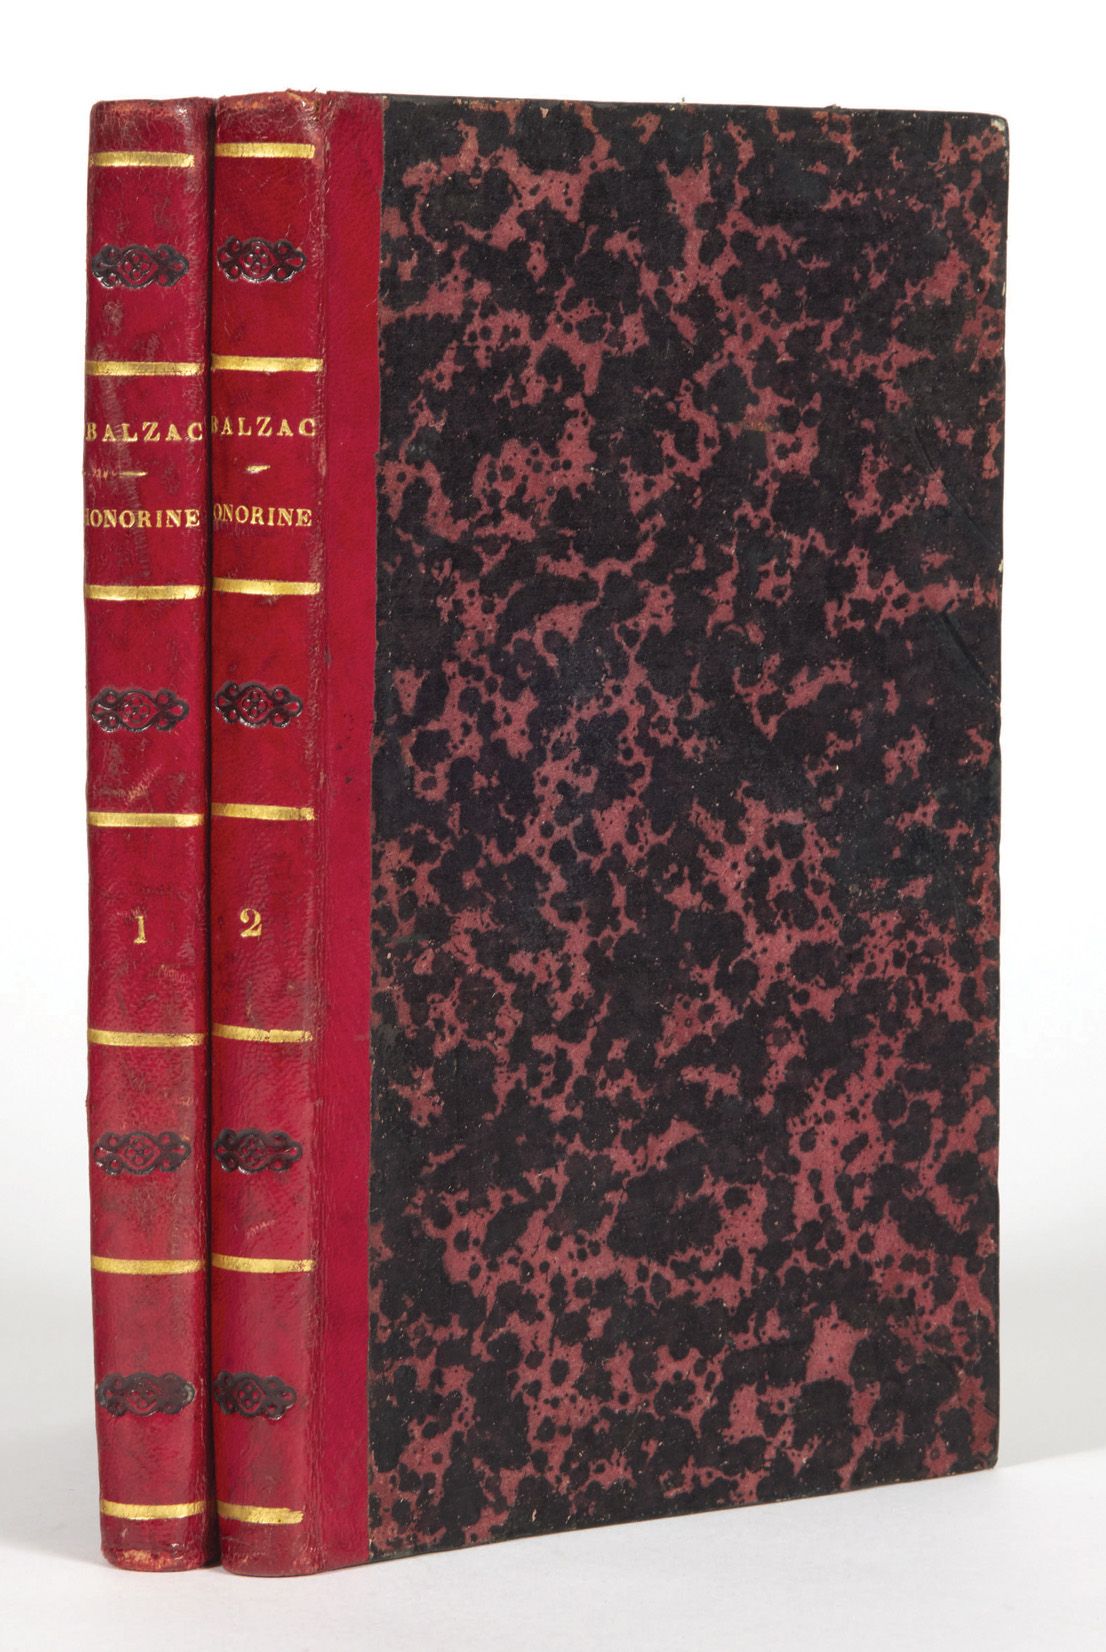 Honoré de BALZAC. Honorine. Paris, De Potter, 1844.
2 volumi in-8: mezza pelle d&hellip;